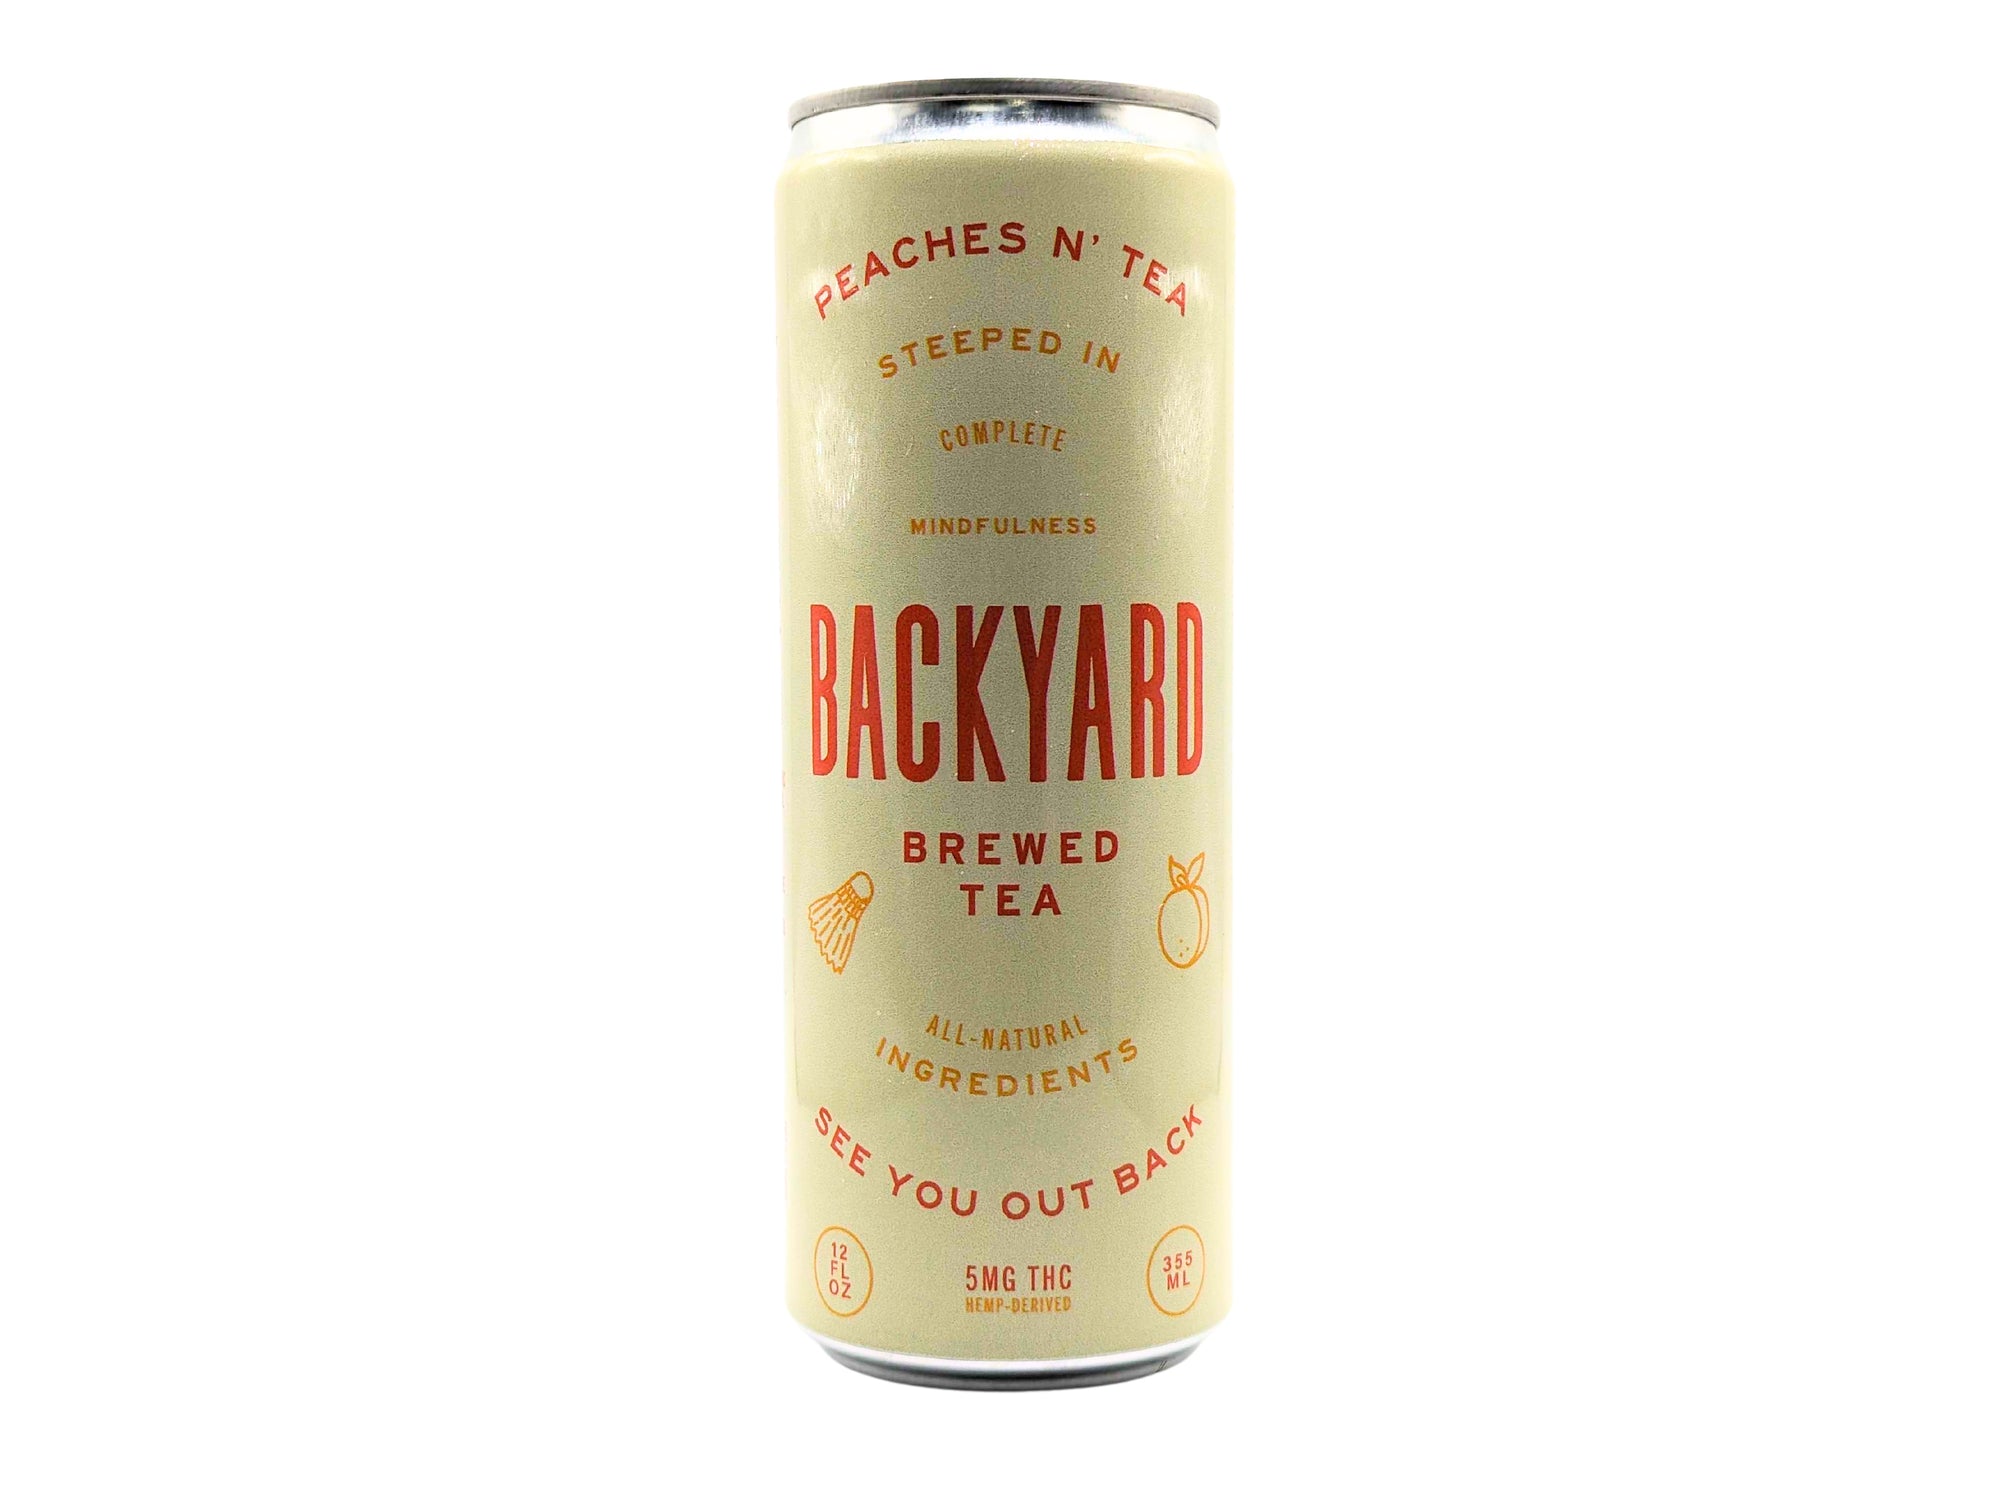 Backyard Brewed Tea - Delta 9 Infused Teas